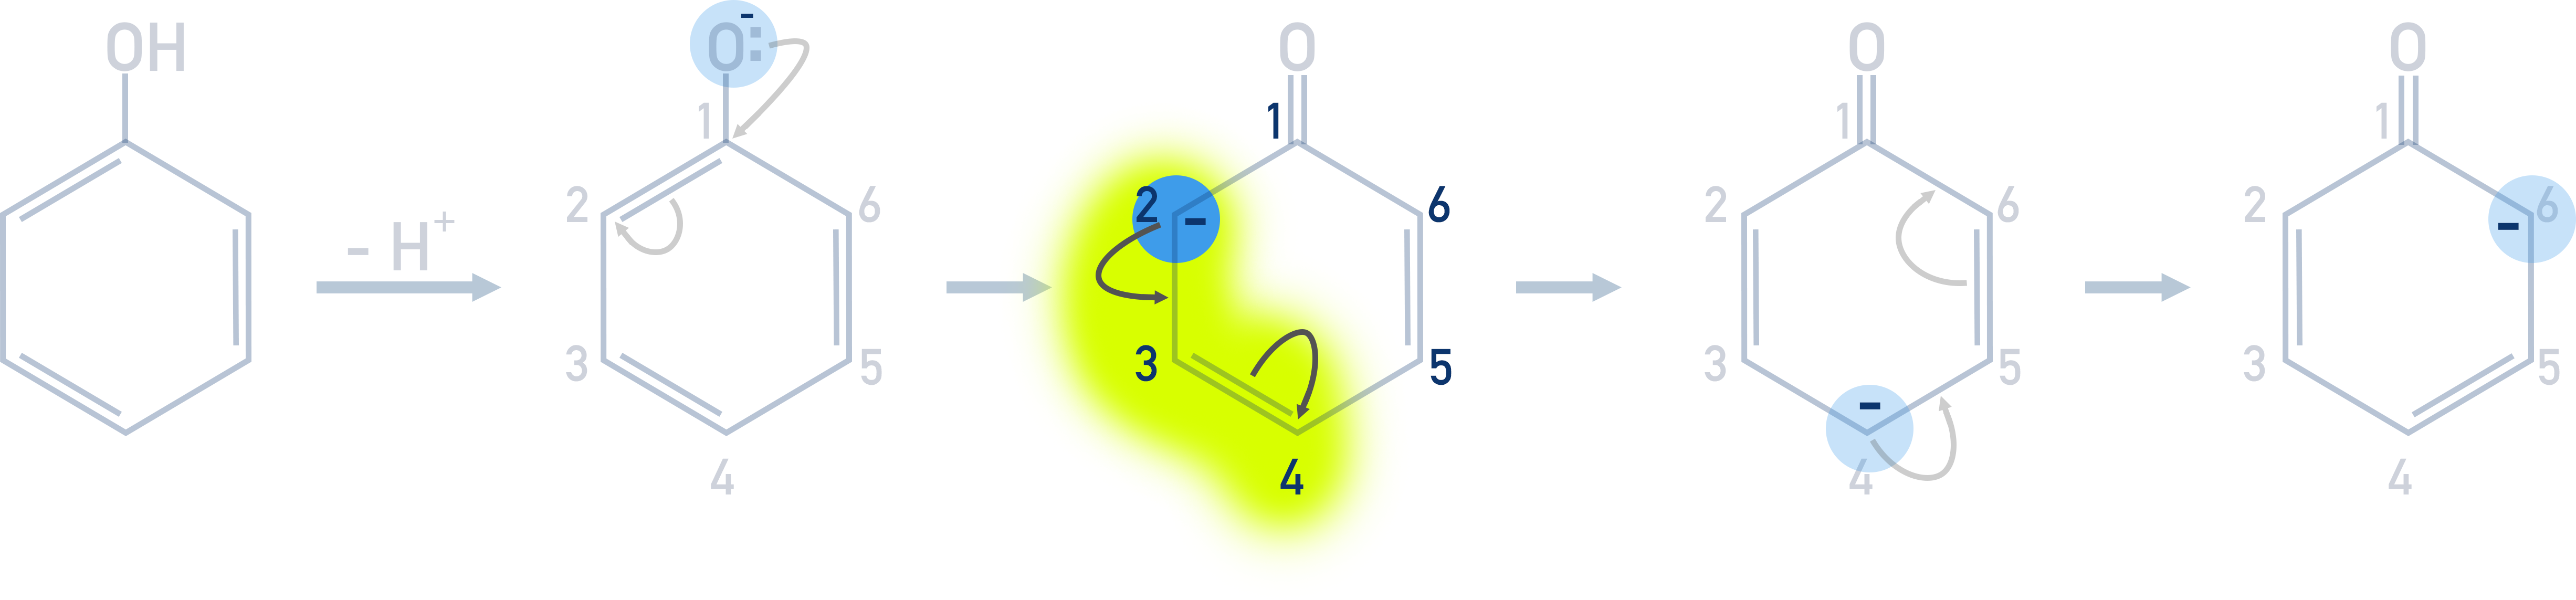 directing effect of phenol resonance 2,4-dibromo-phenol